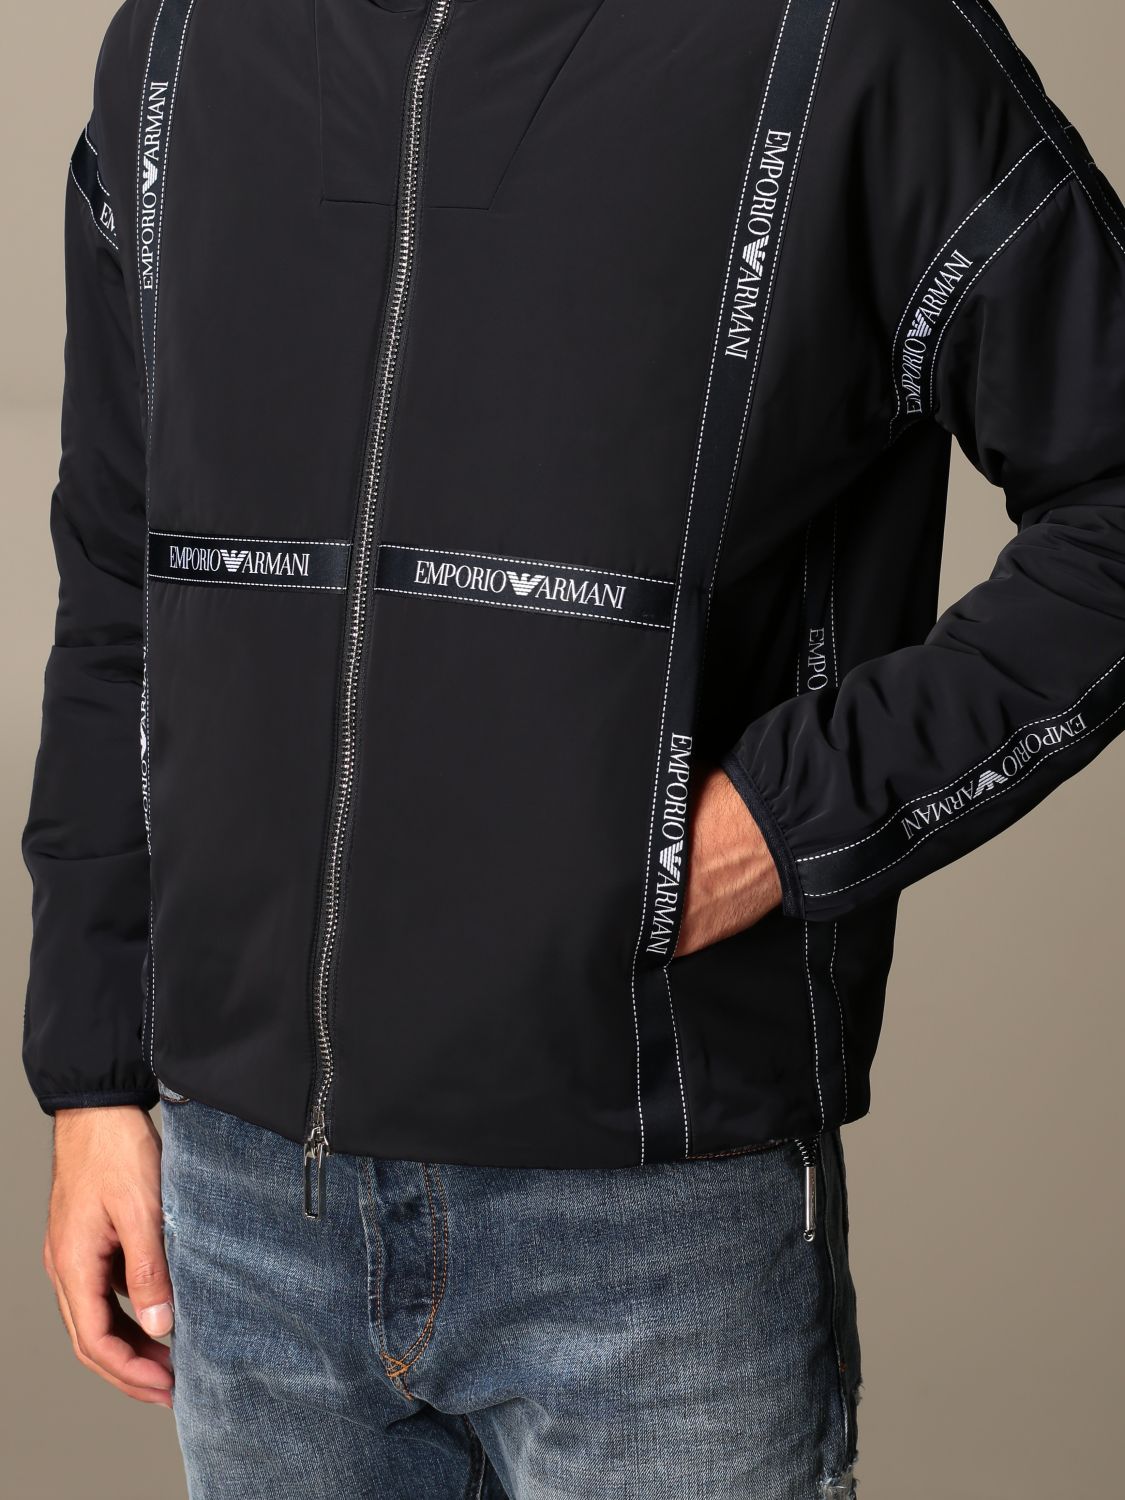 Emporio Armani Outlet: jacket with logoed bands | Jacket Emporio Armani ...